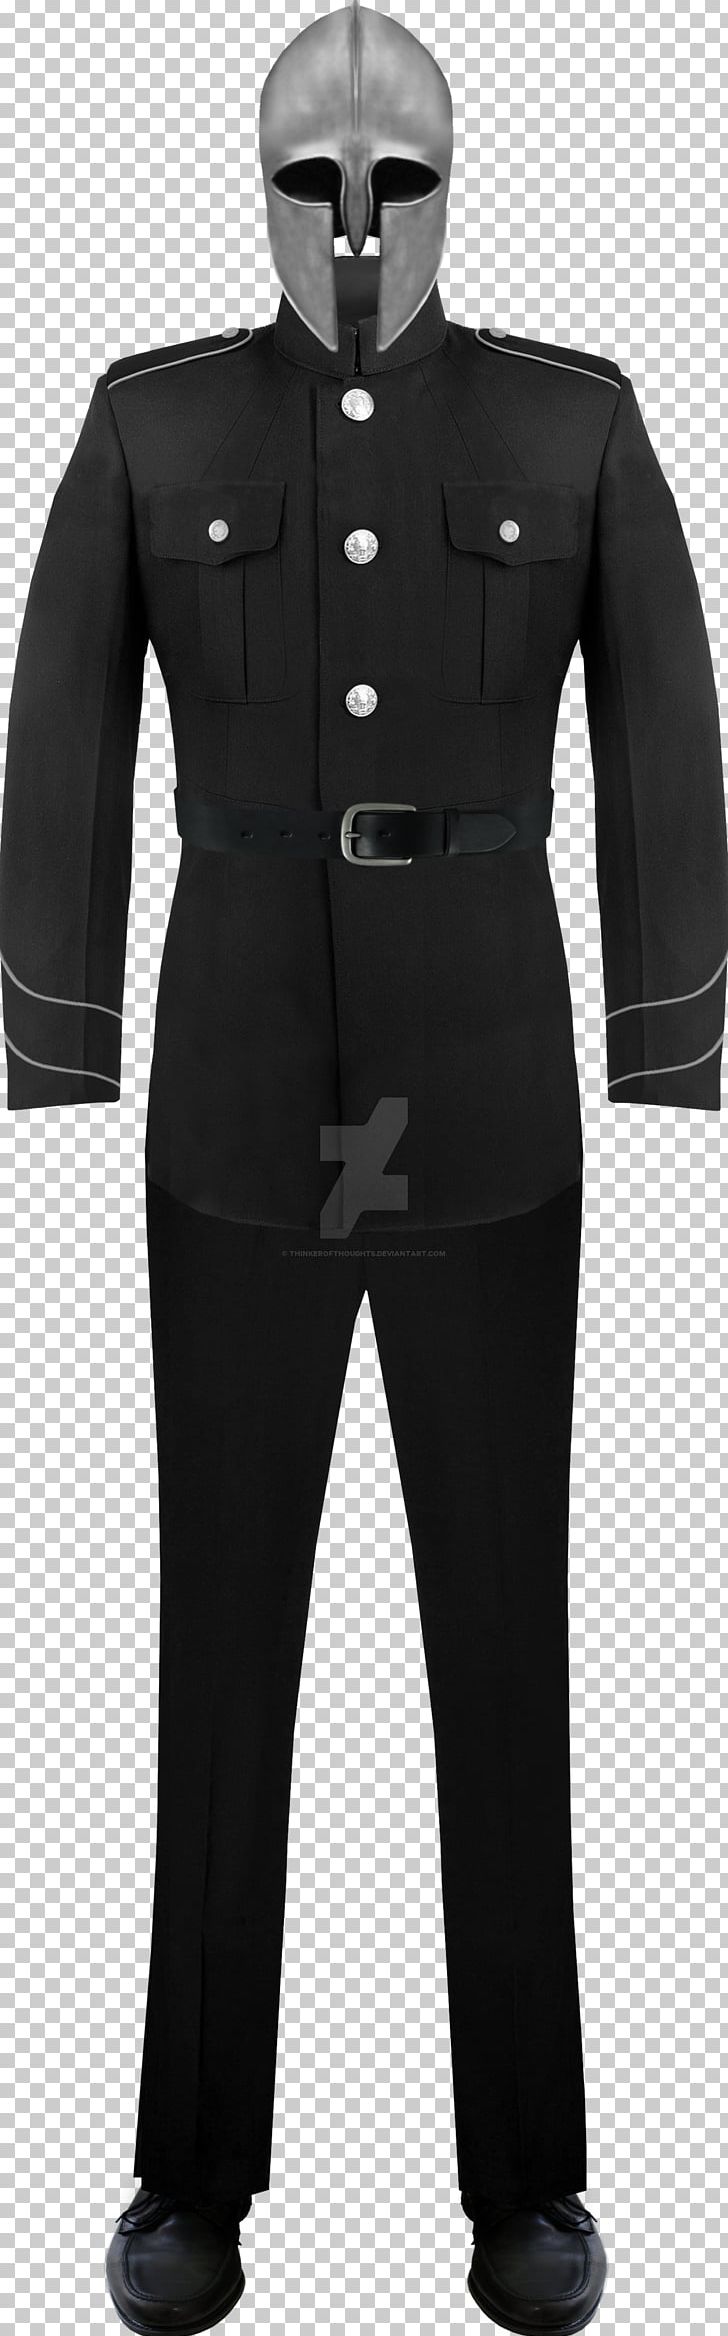 Formal Wear Backpack Uniform Satchel Amazon.com PNG, Clipart, Amazoncom, Backpack, Black, Black M, Costume Free PNG Download